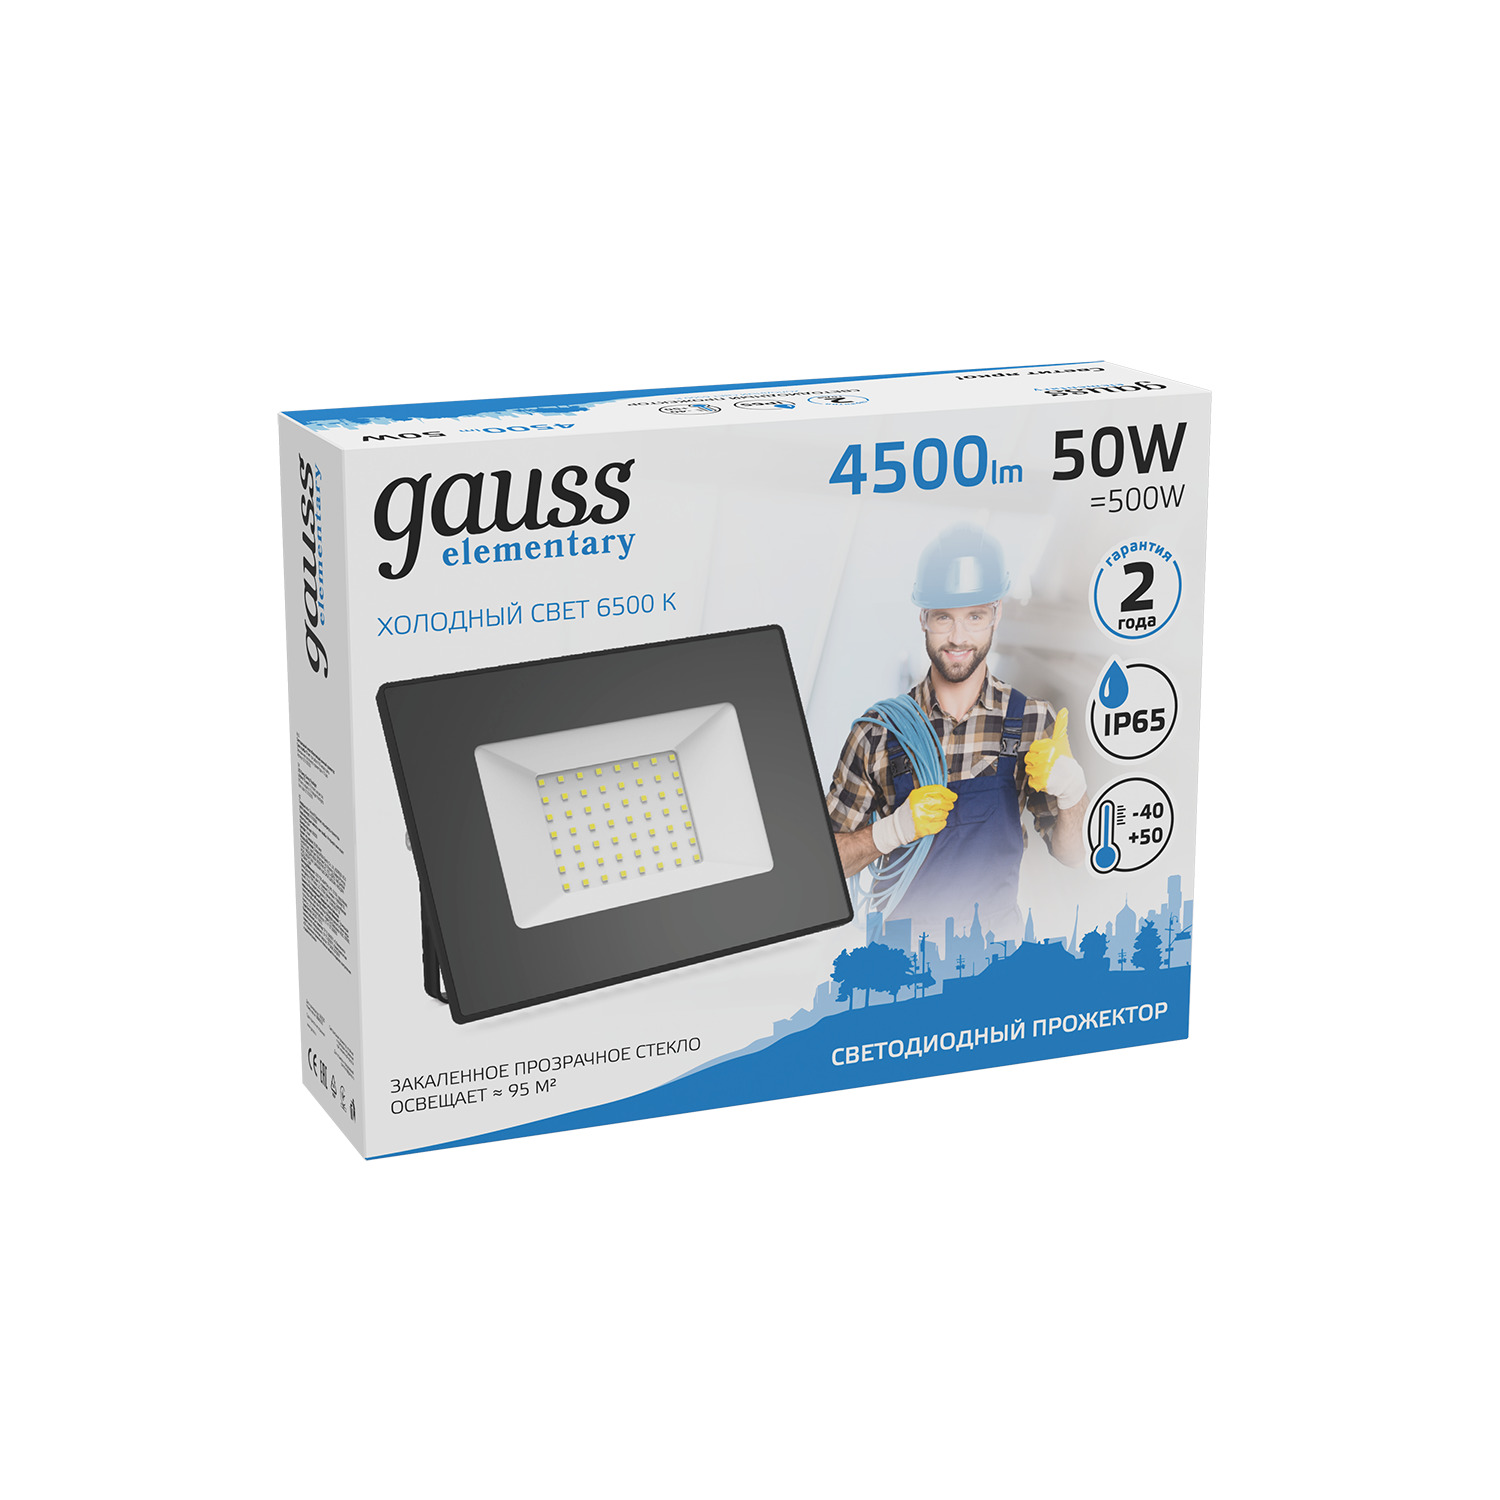 Прожектор gauss led 50w 285х235х138 ip65 Gauss, цвет чёрный - фото 3